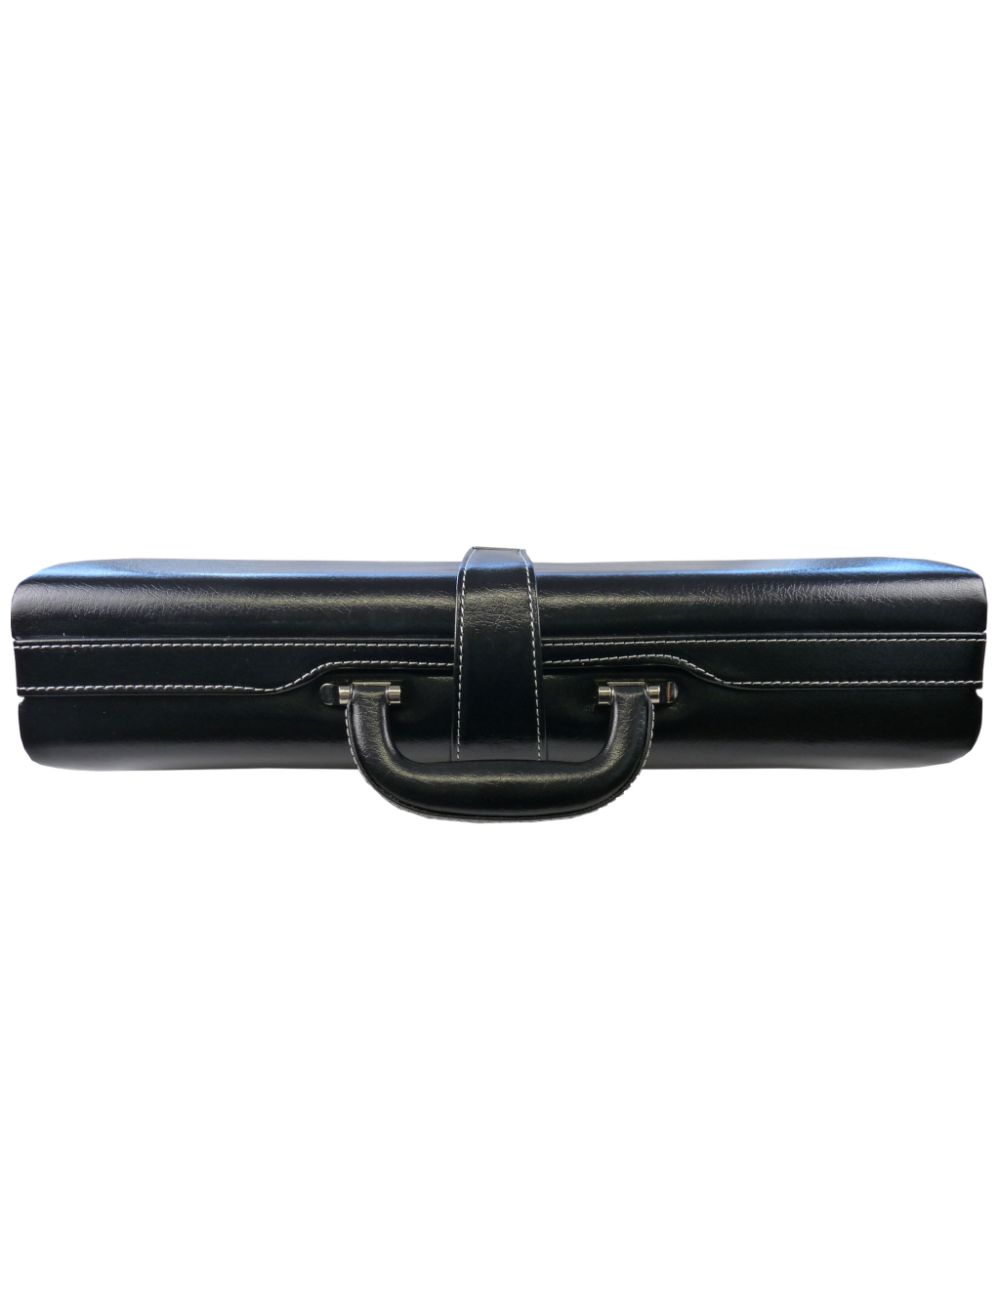 Roamlite Executive Briefcase Black Pu Leather RL919  top